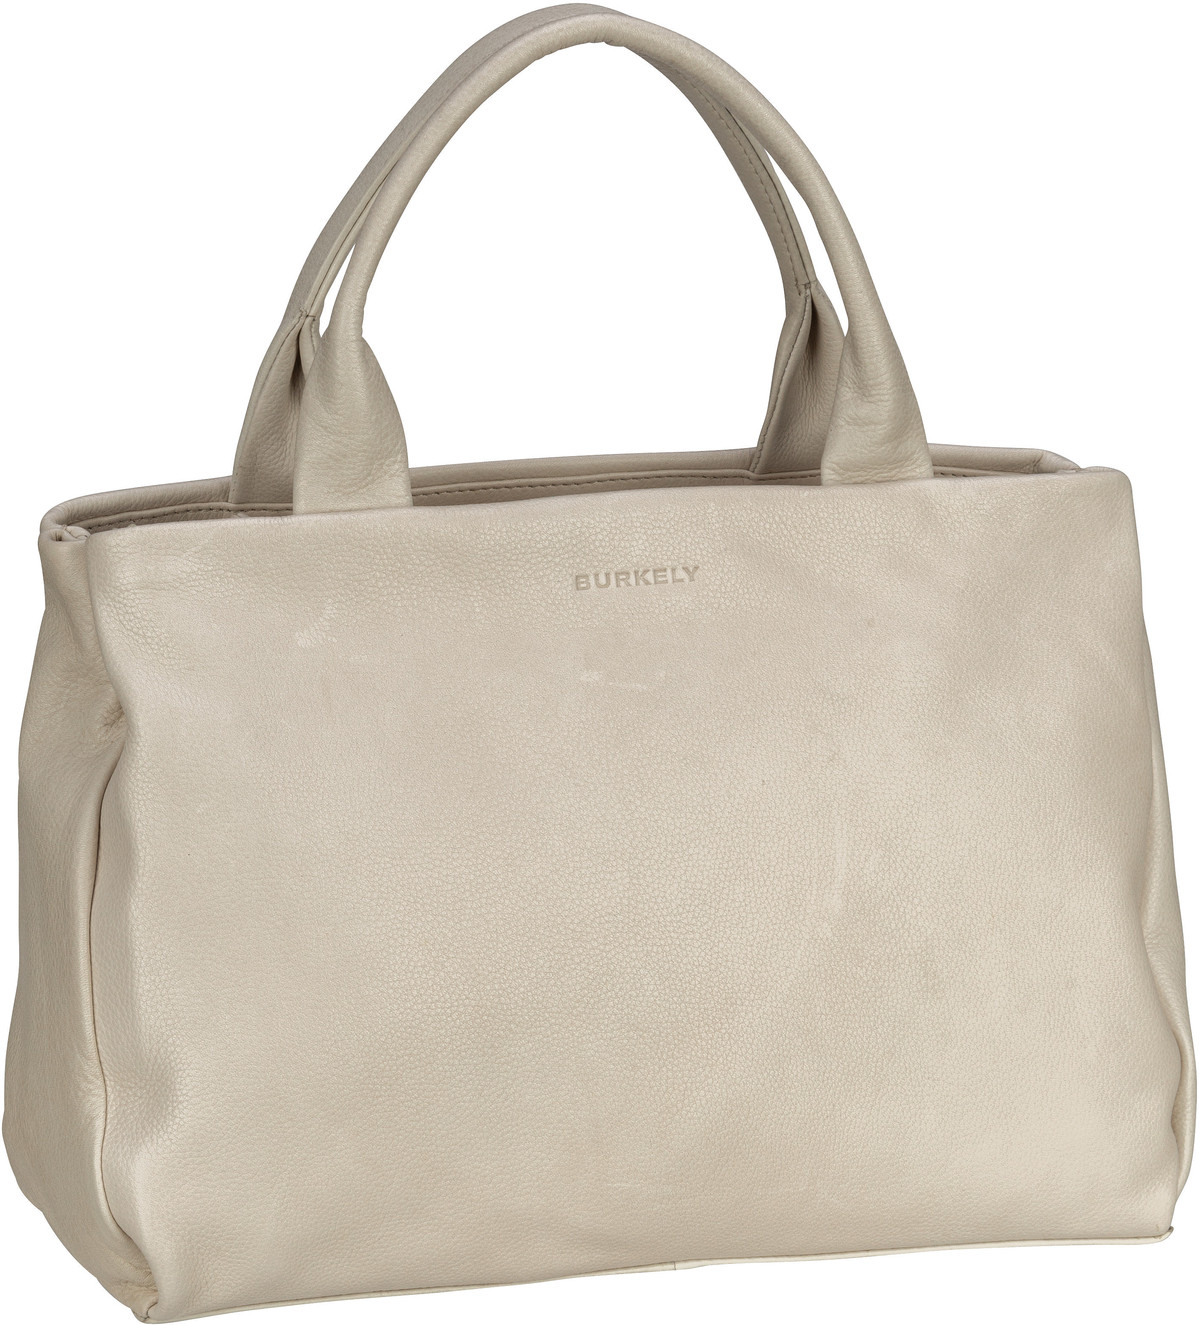 Burkely Just Jolie Handbag - Off White